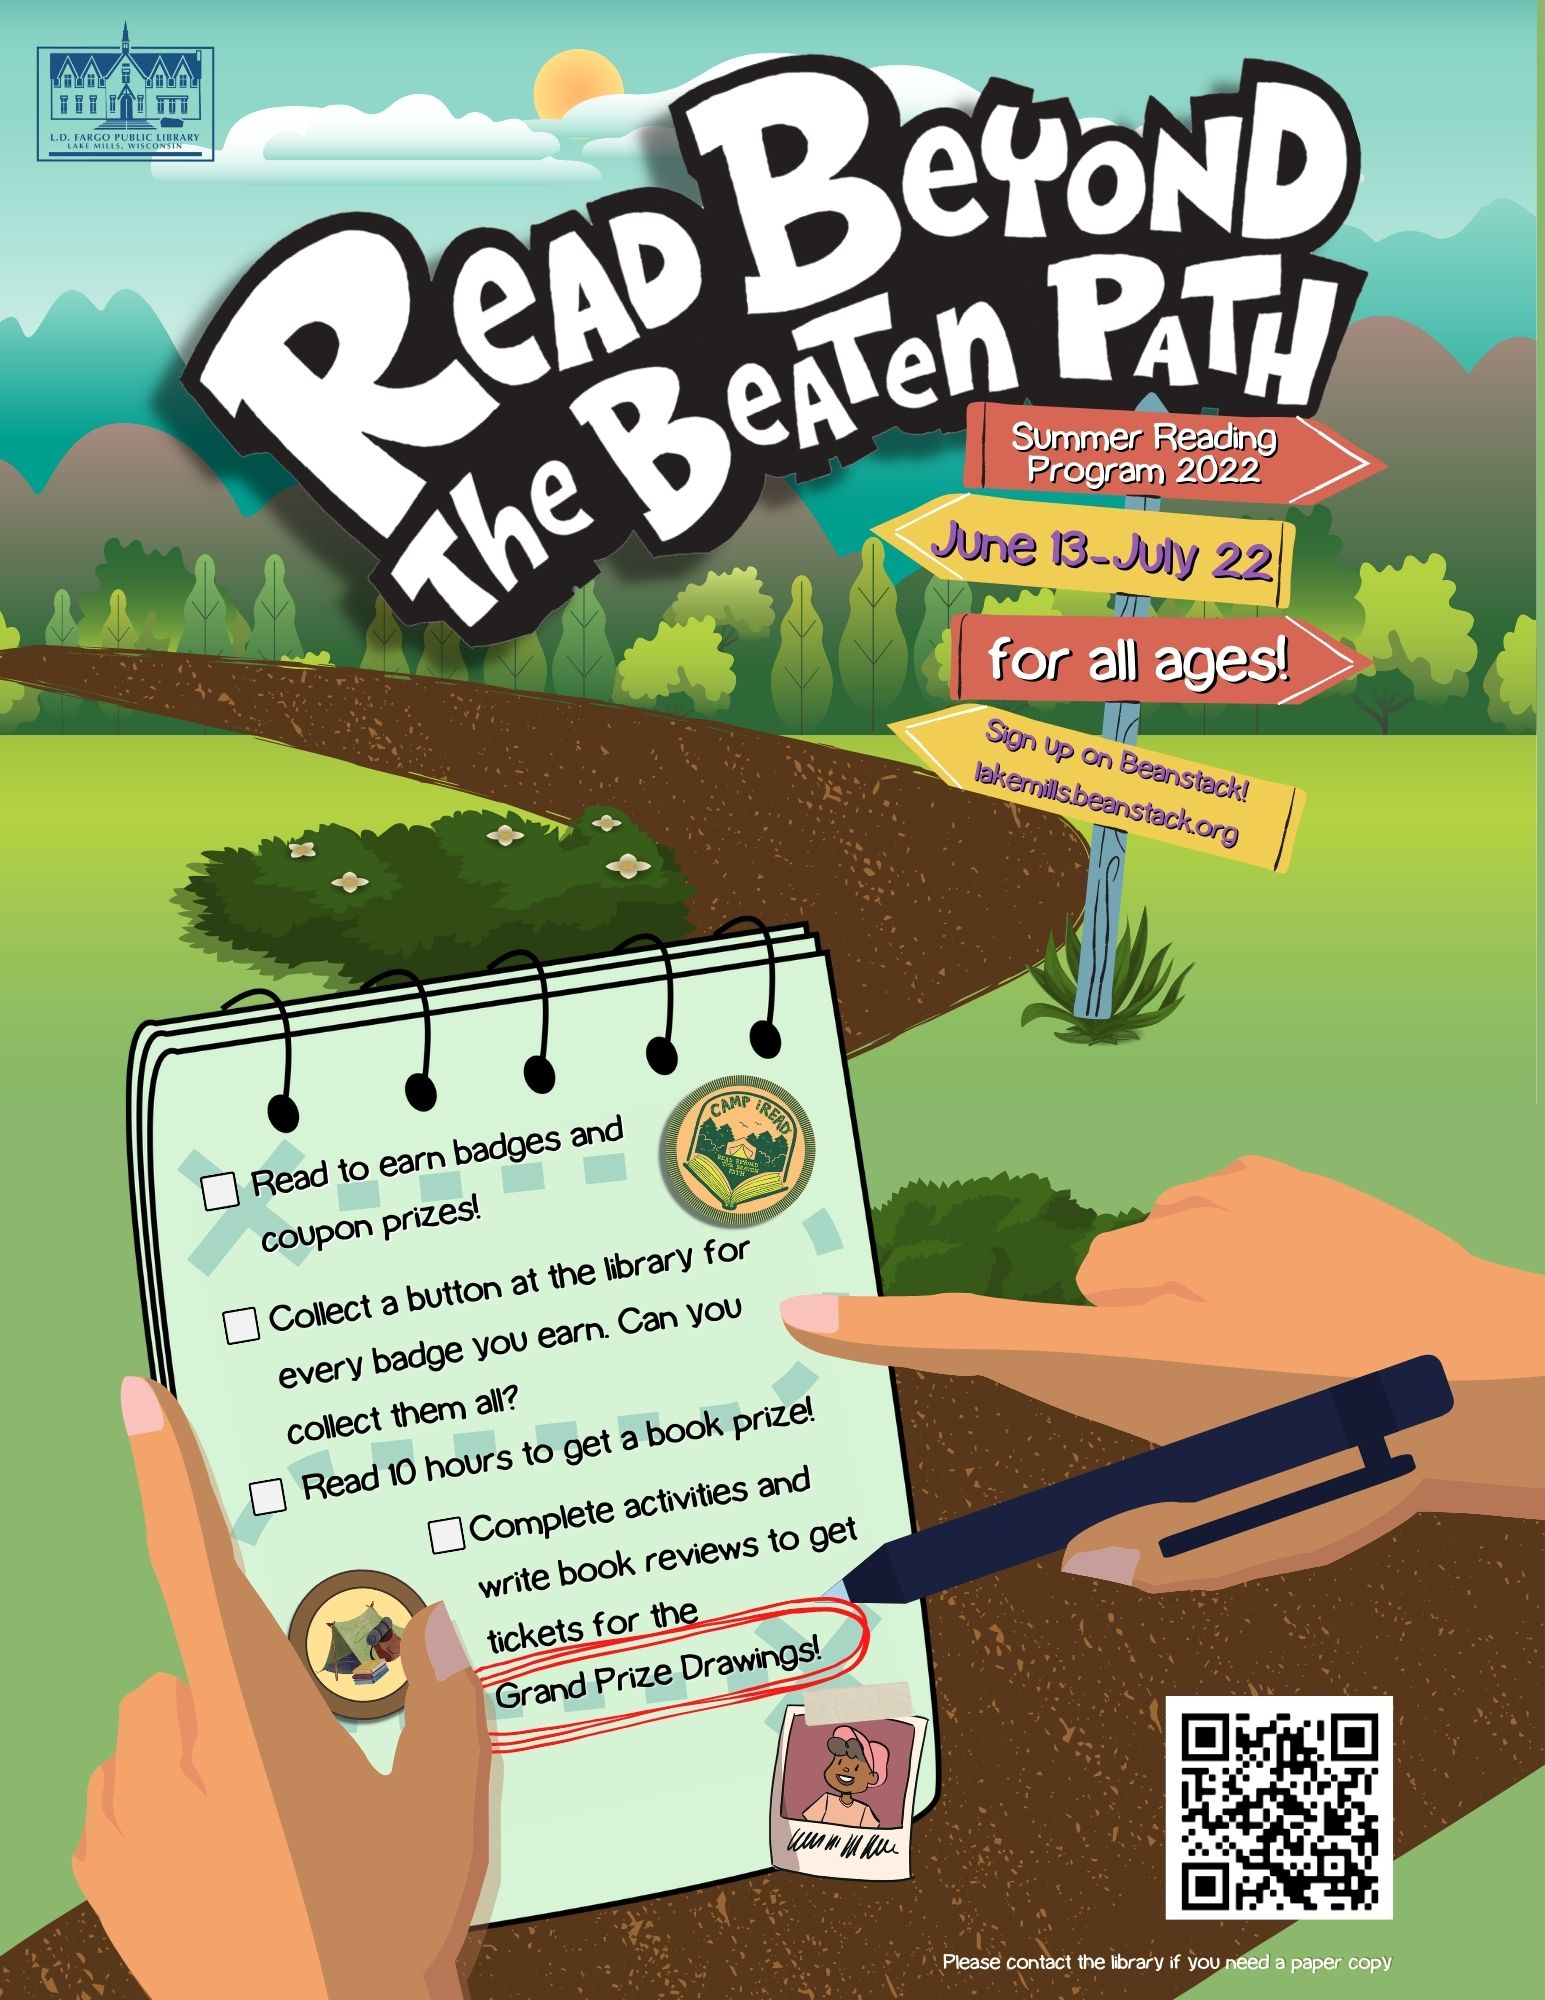 Summer Reading Program.  June 13-July 22.  All Ages.